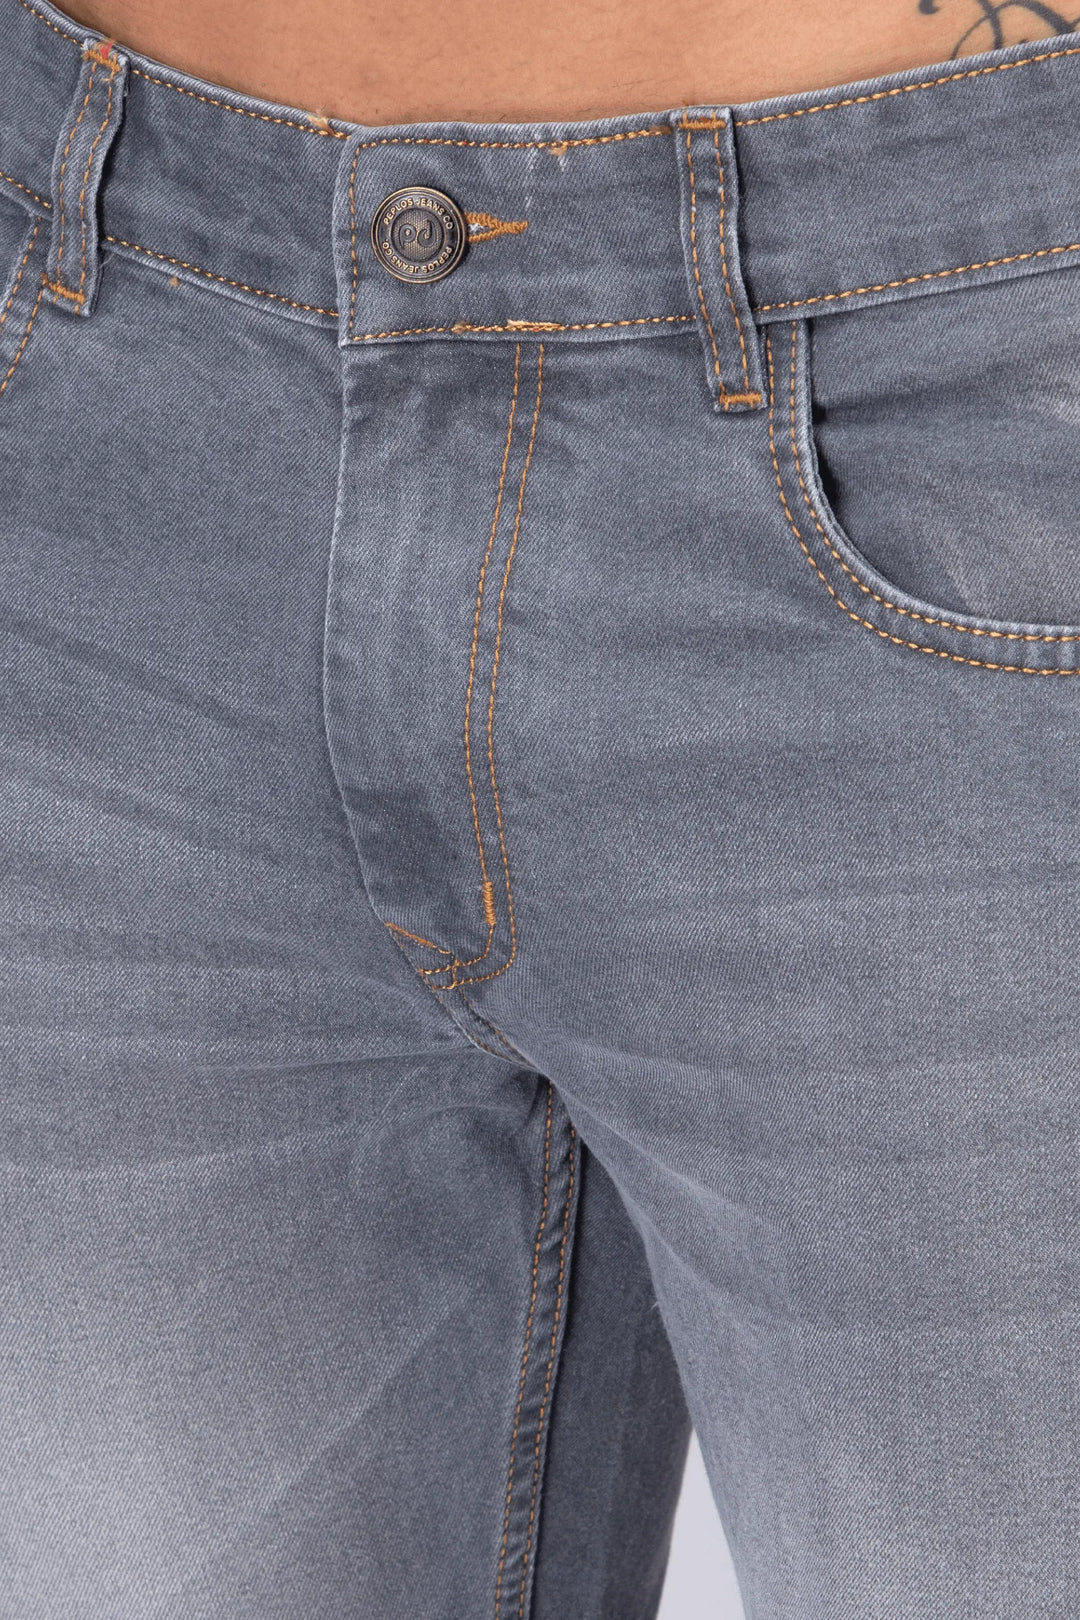 Slim Tapered Fit Grey Stretchable Premium Denim Jeans - Peplos Jeans 